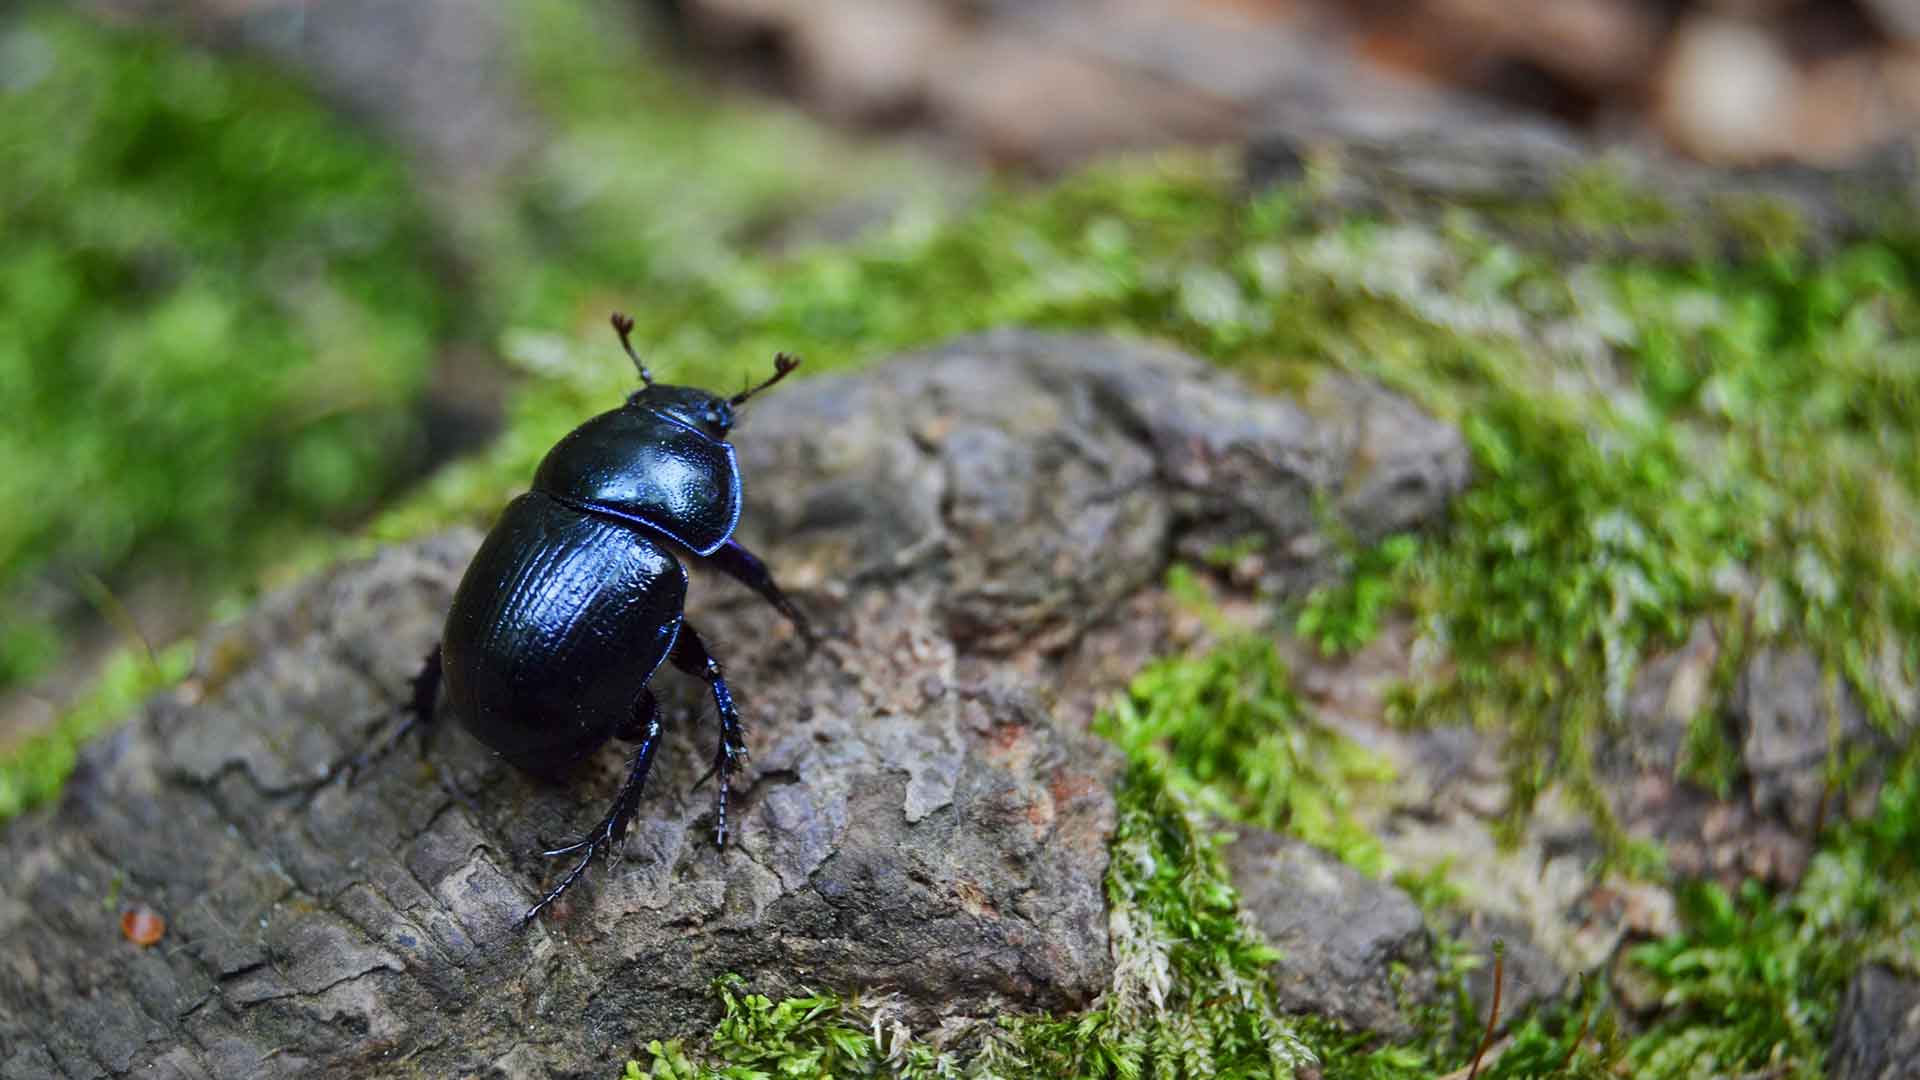 Beetle on a rock